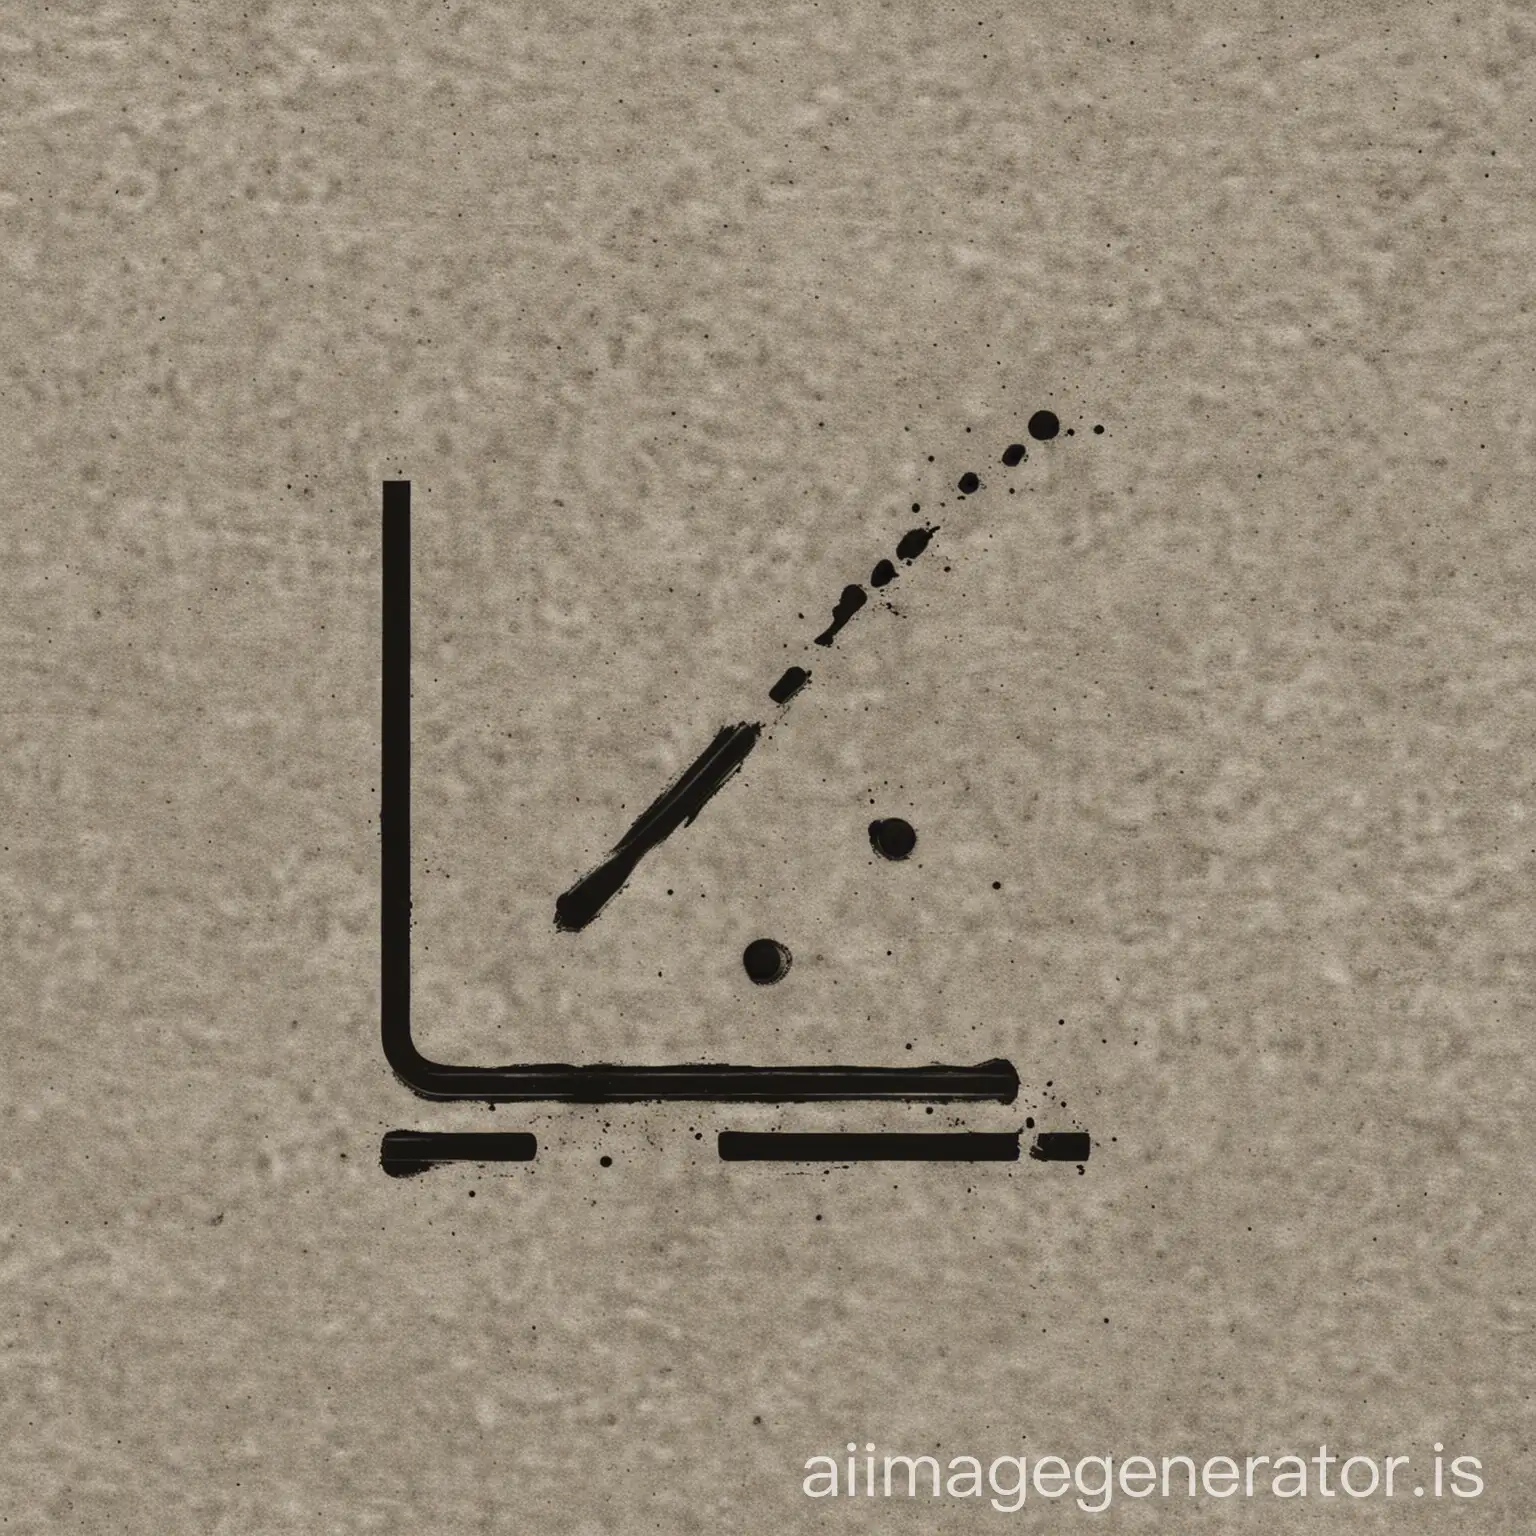 a simple ‘novel scene concretization’ website's logo